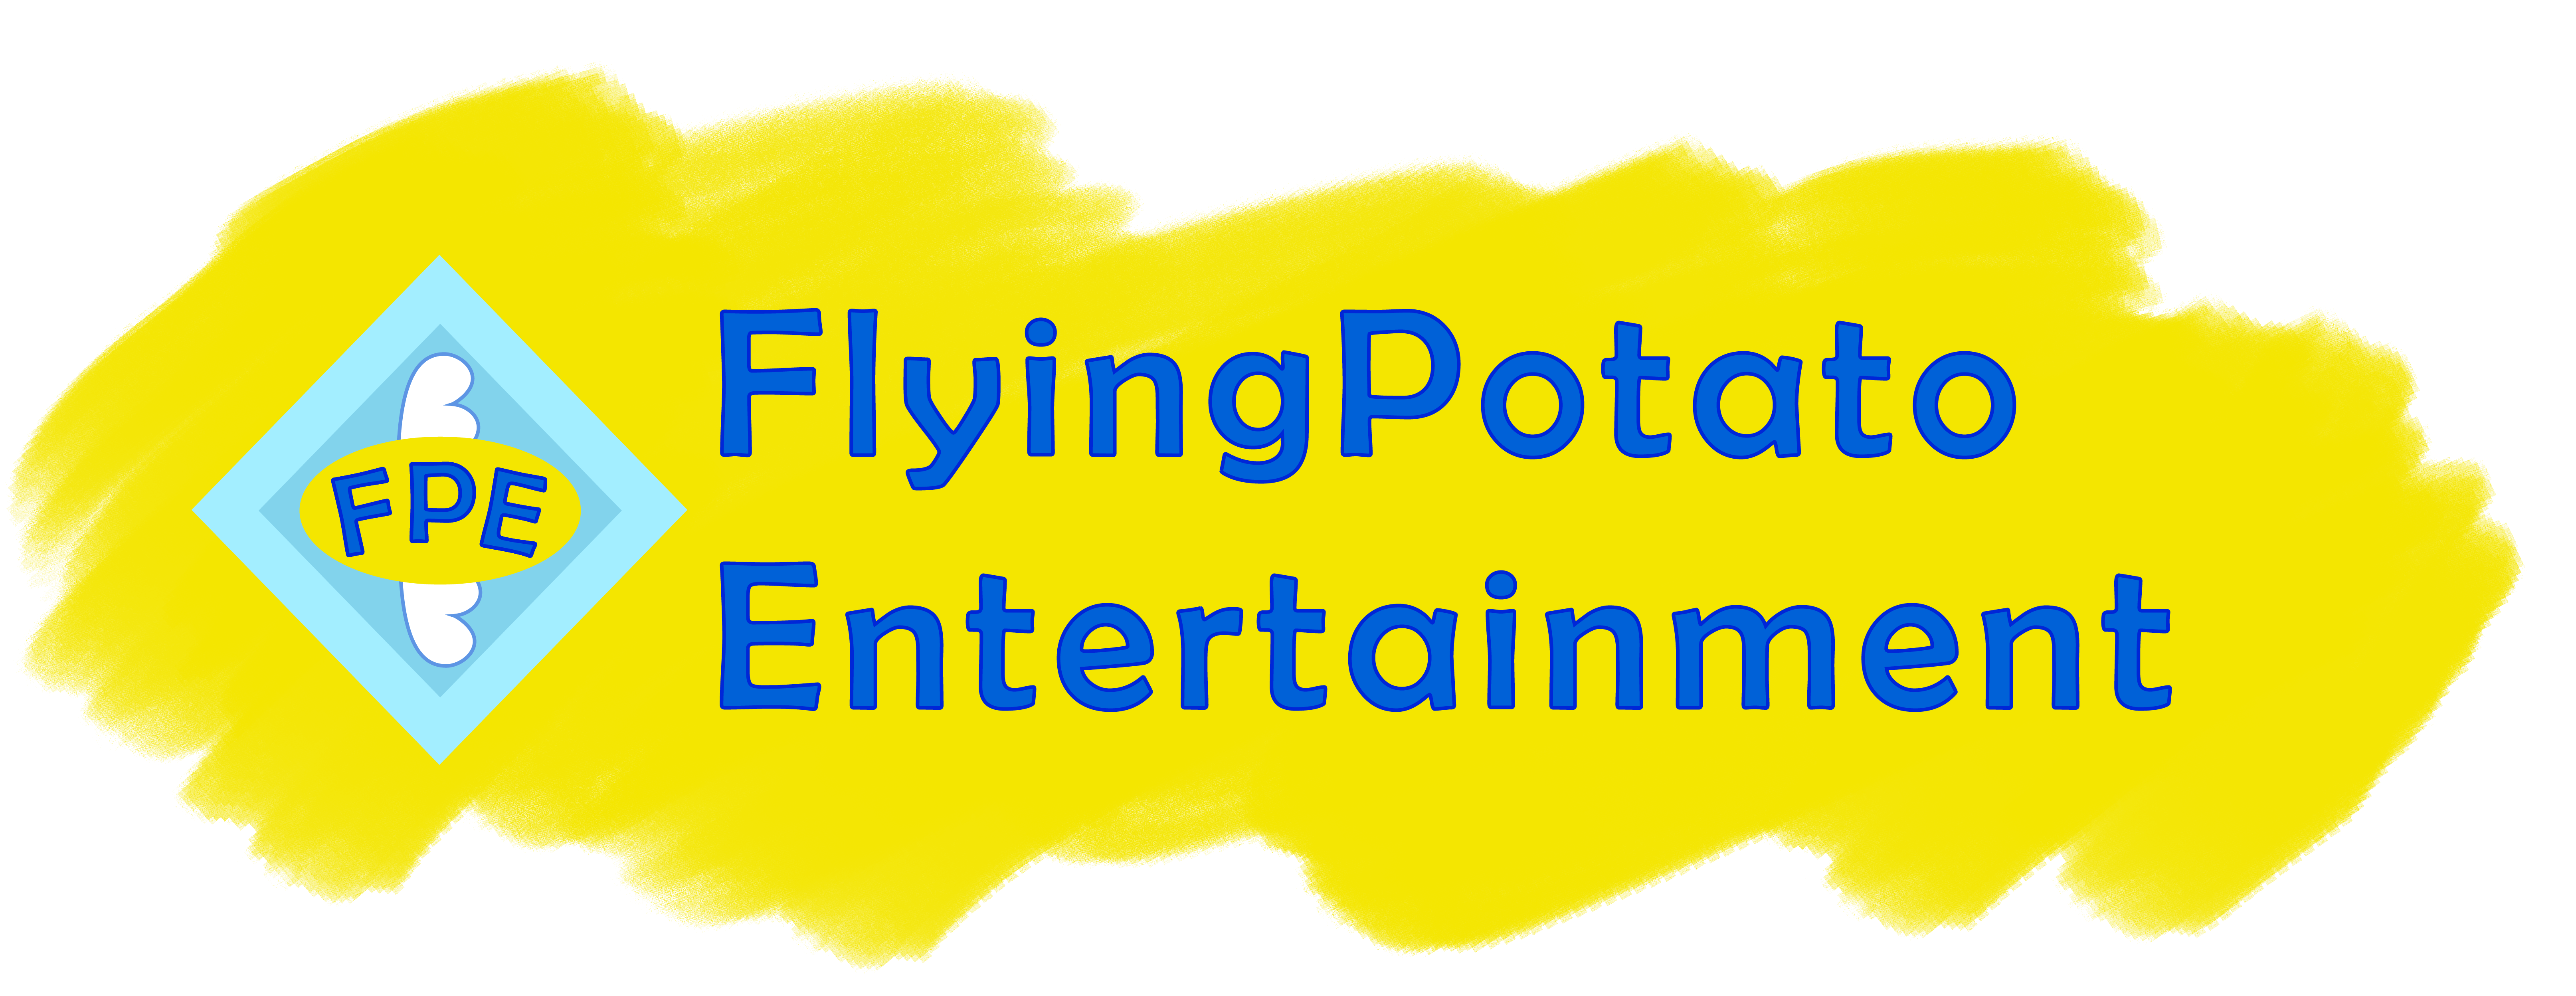 FlyingPotato Entertainment